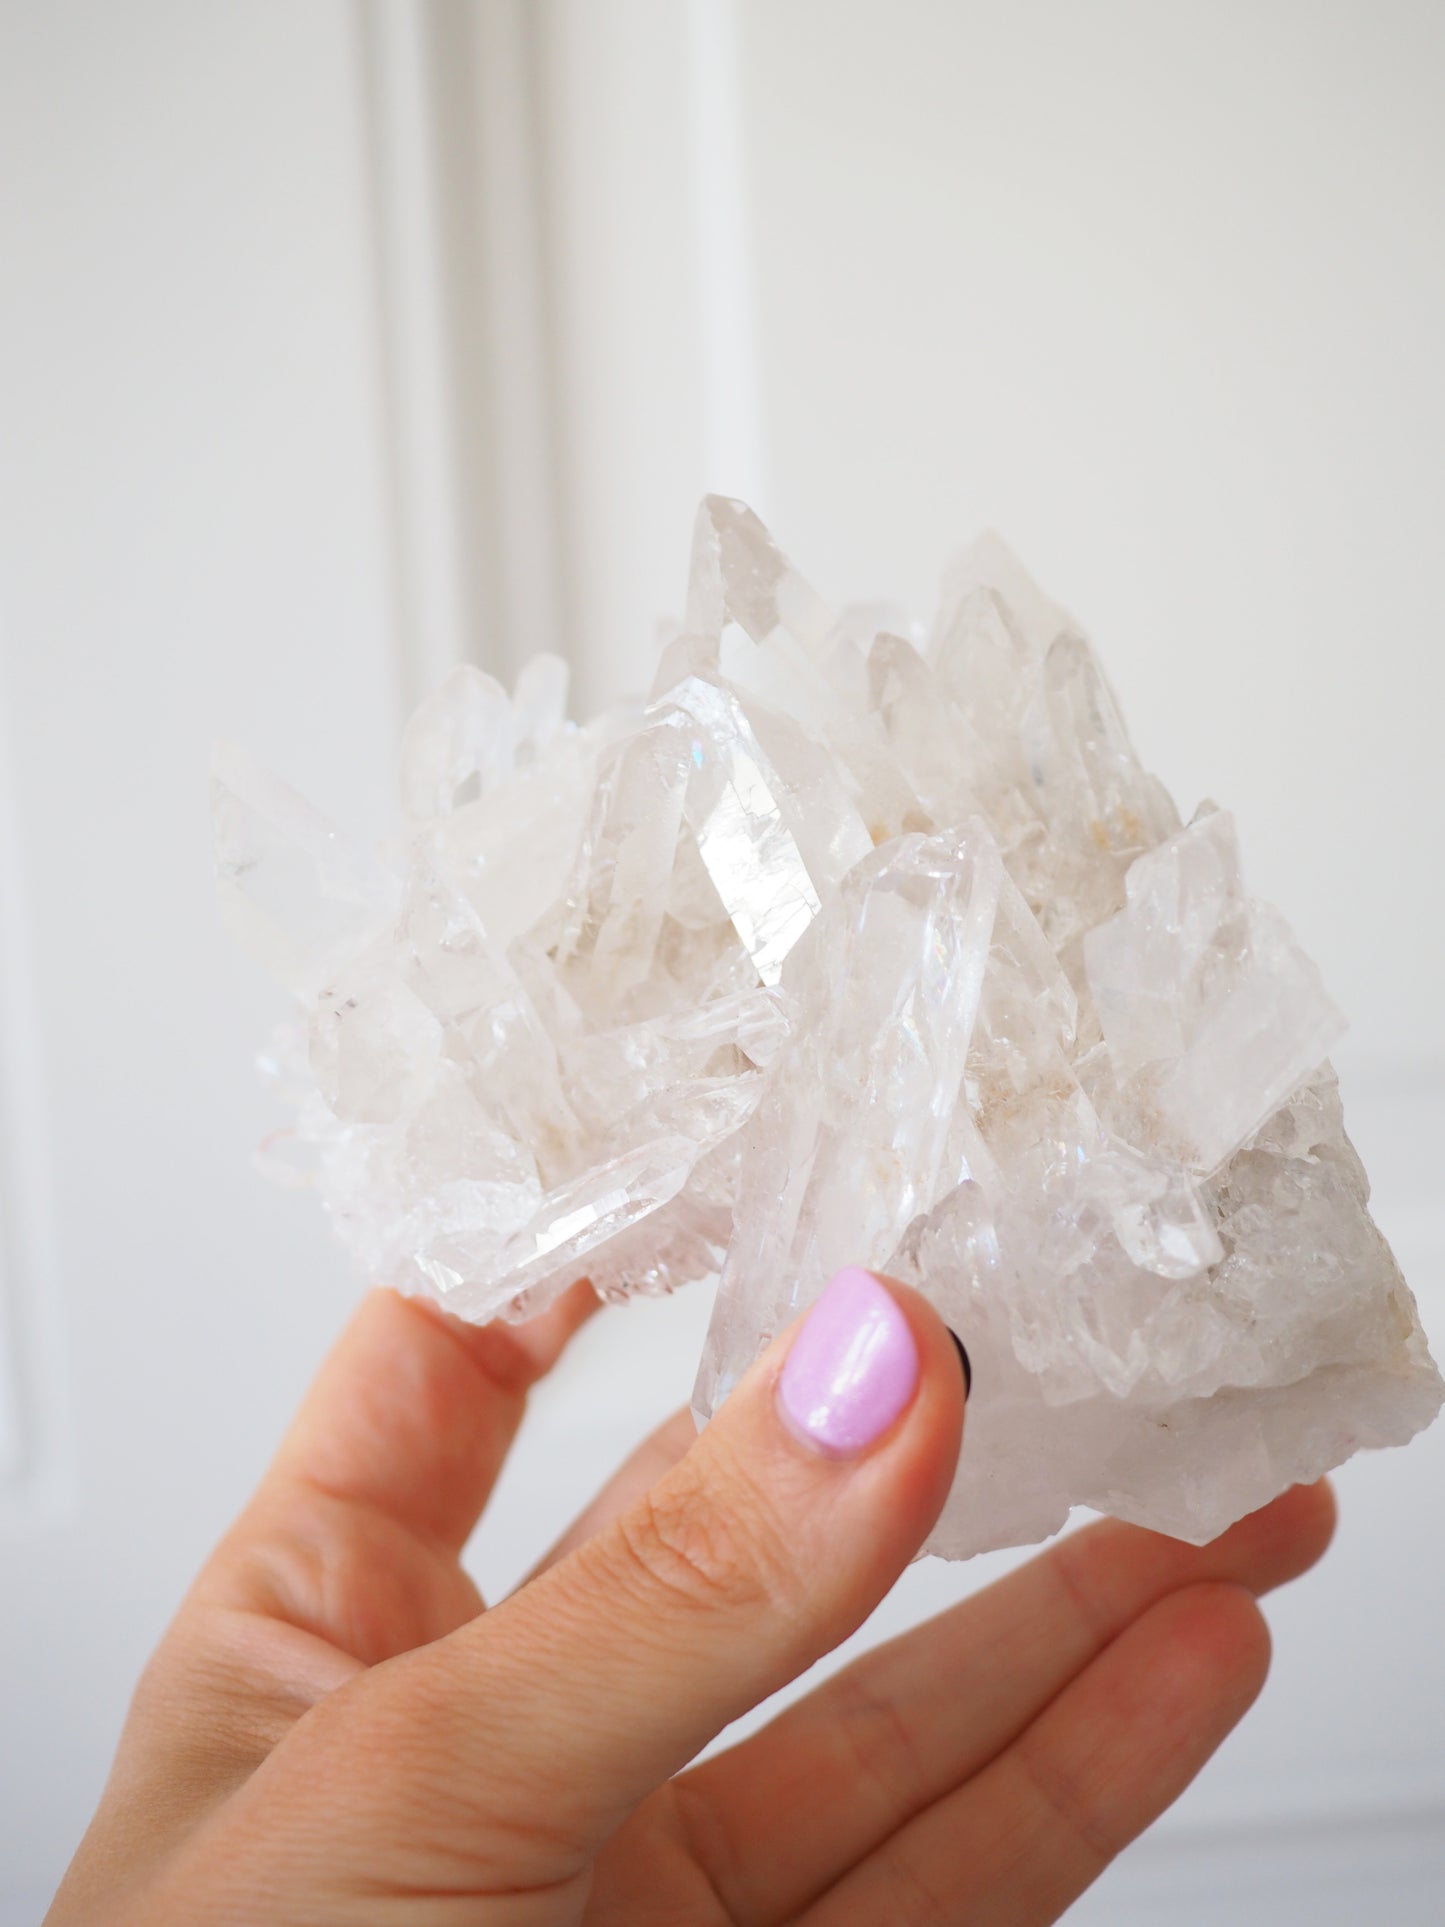 Bergkristall Cluster ca  11cm [1] - aus Minas Gerais Brasilien HIGH QUALITY